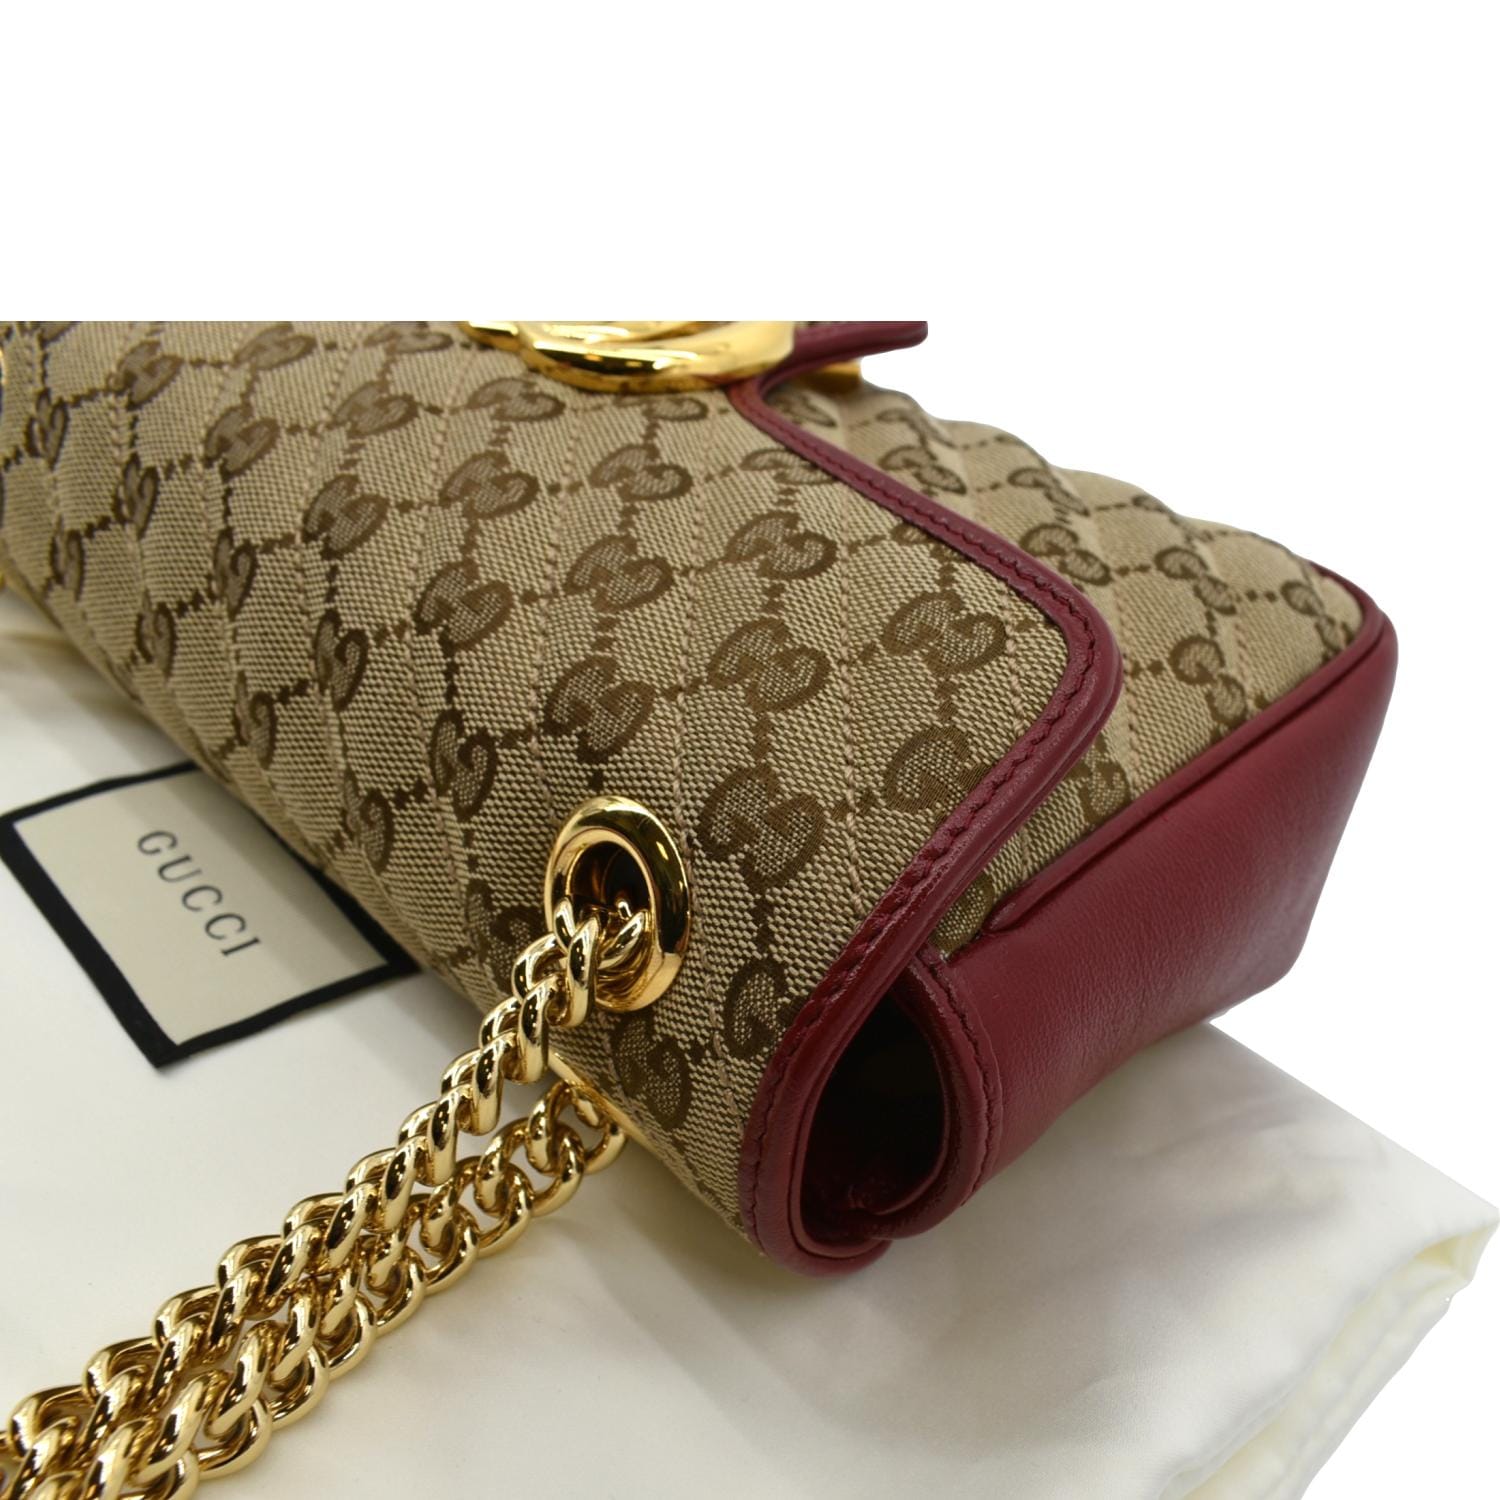 Gucci denim tote handbag - Gem